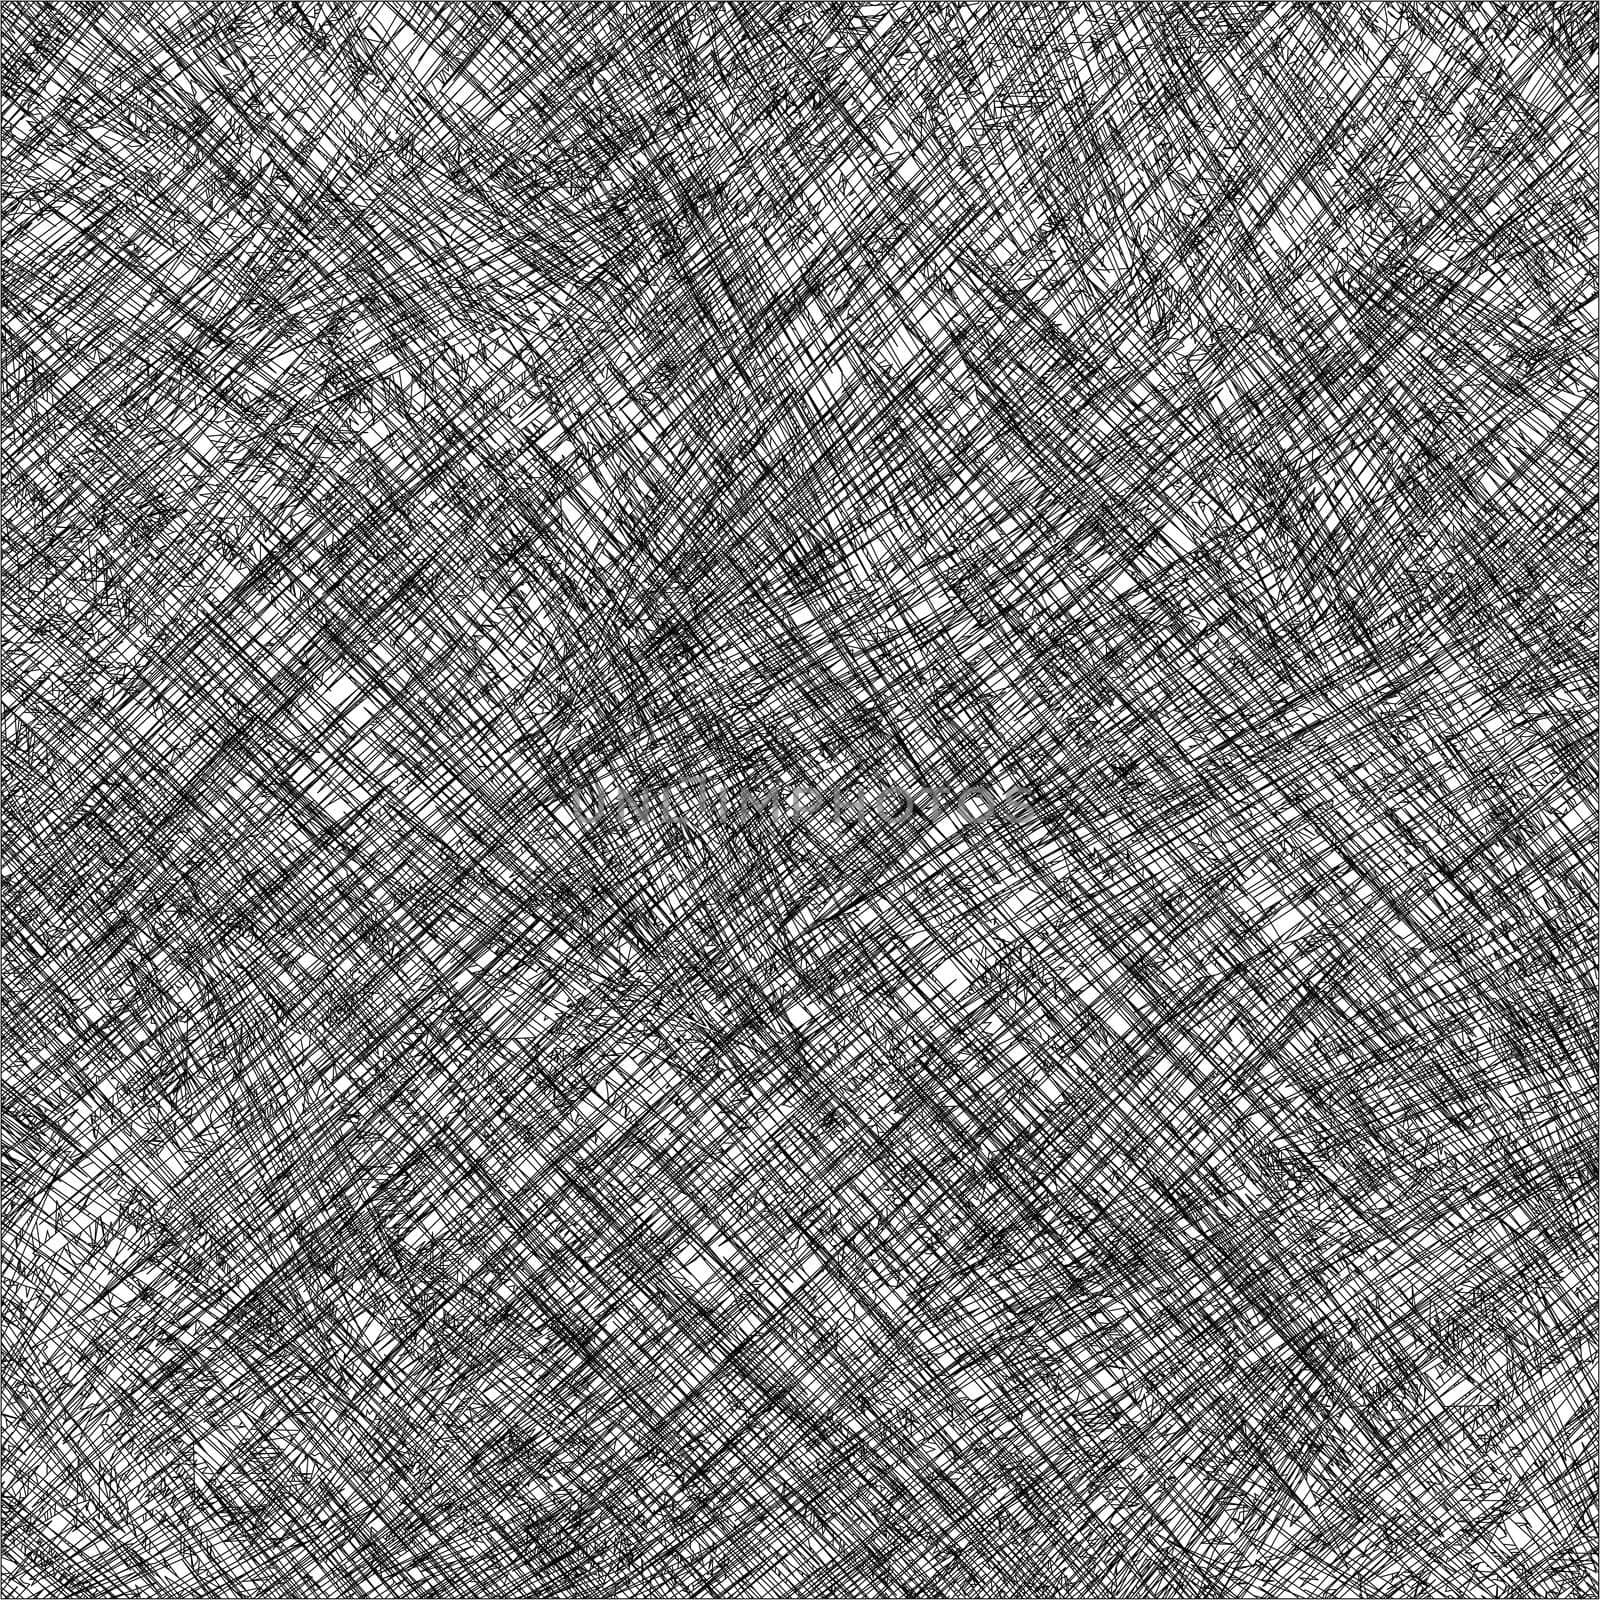 white and black stripes mesh, abstract art illustration